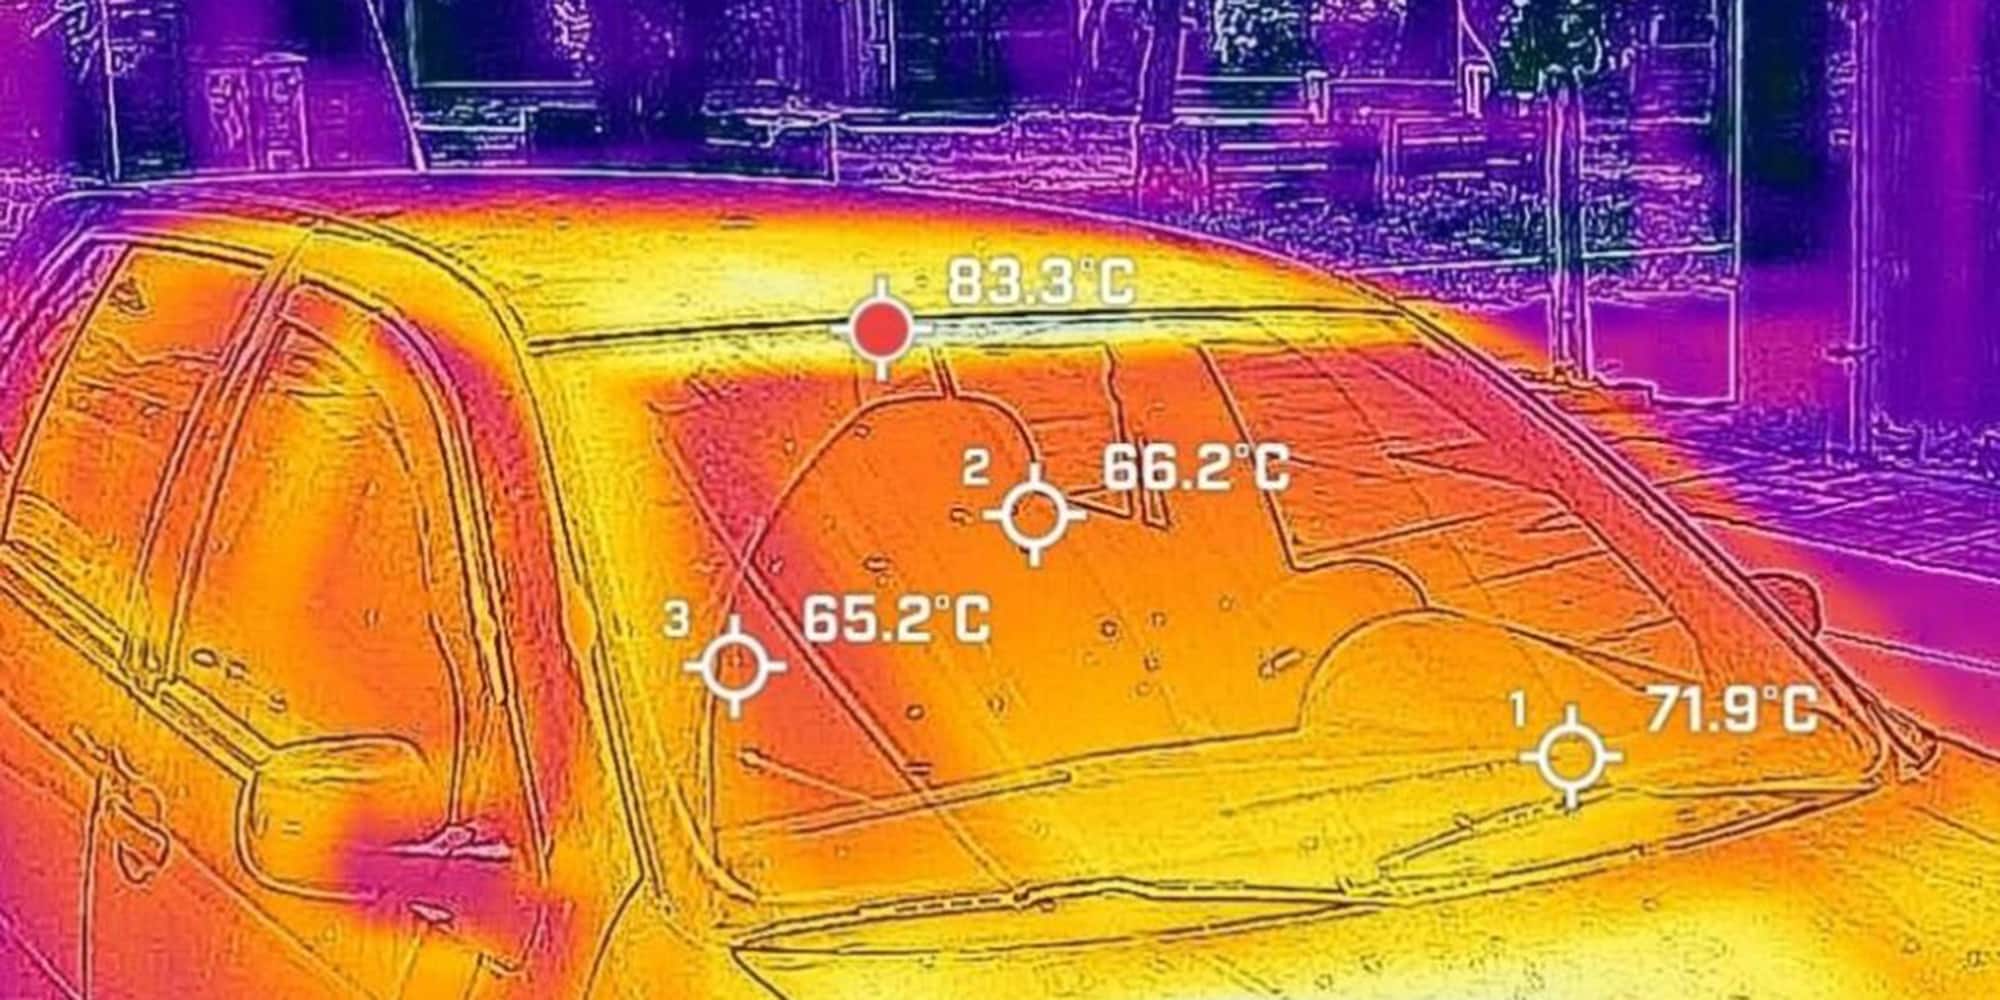 kausonas 3 1024x626 1 - Καύσωνας Κλέων: Απίστευτο και όμως αληθινό - Στους 84 βαθμούς η θερμοκρασία στις λαμαρίνες των αυτοκινήτων